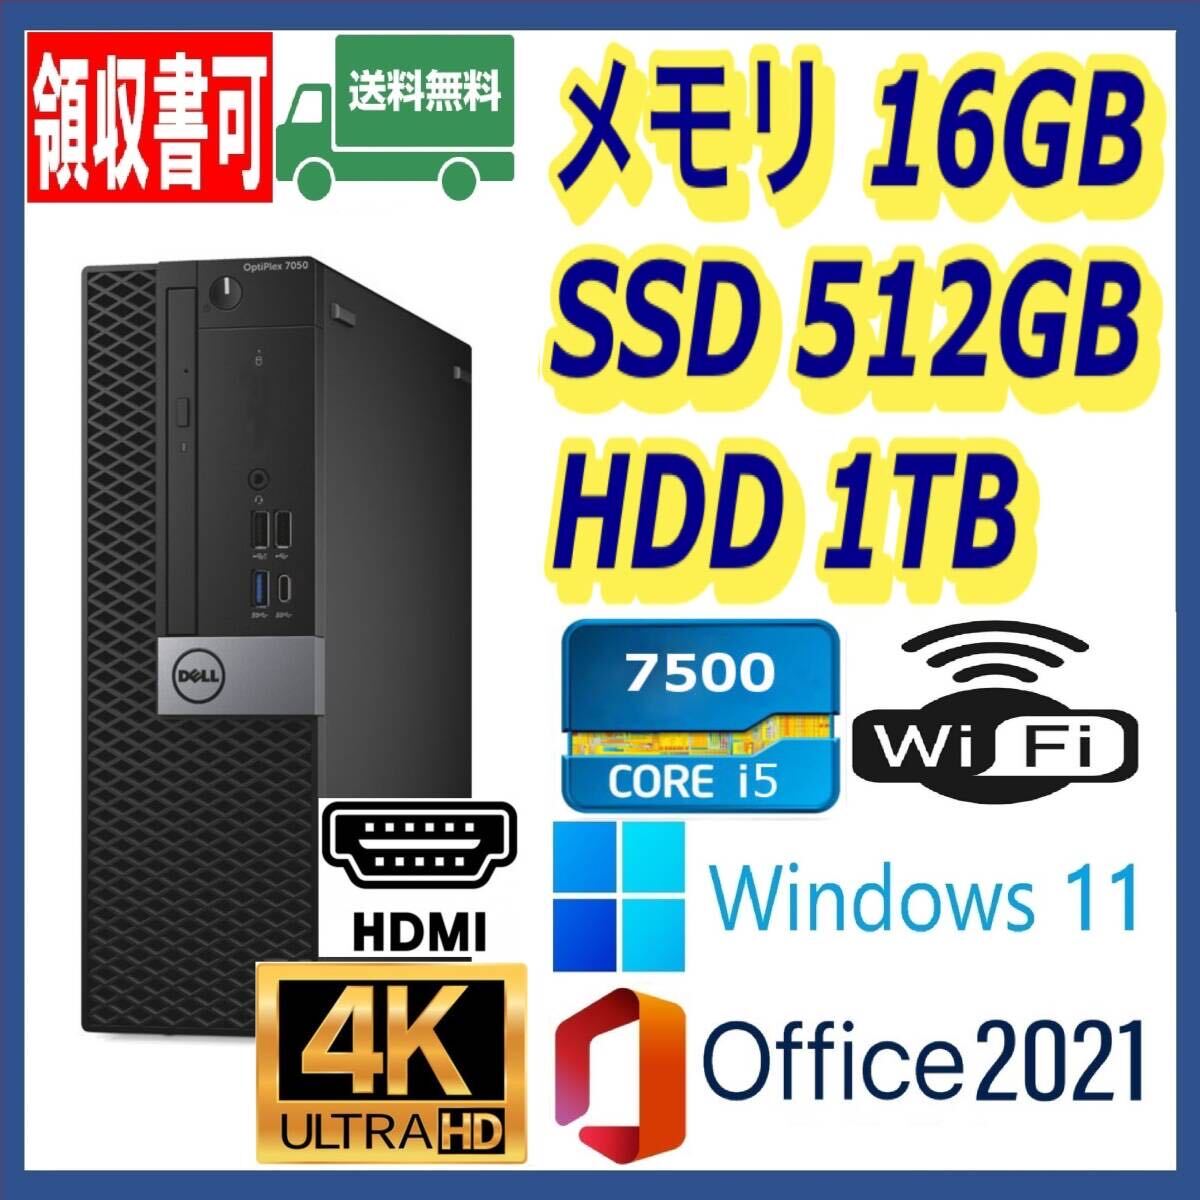 ★4K出力★小型★超高速 i5-7500/高速SSD512GB+大容量HDD1TB/大容量16GBメモリ/Wi-Fi(無線)/USB3.1/HDMI/Windows 11/MS Office 2021★_画像1